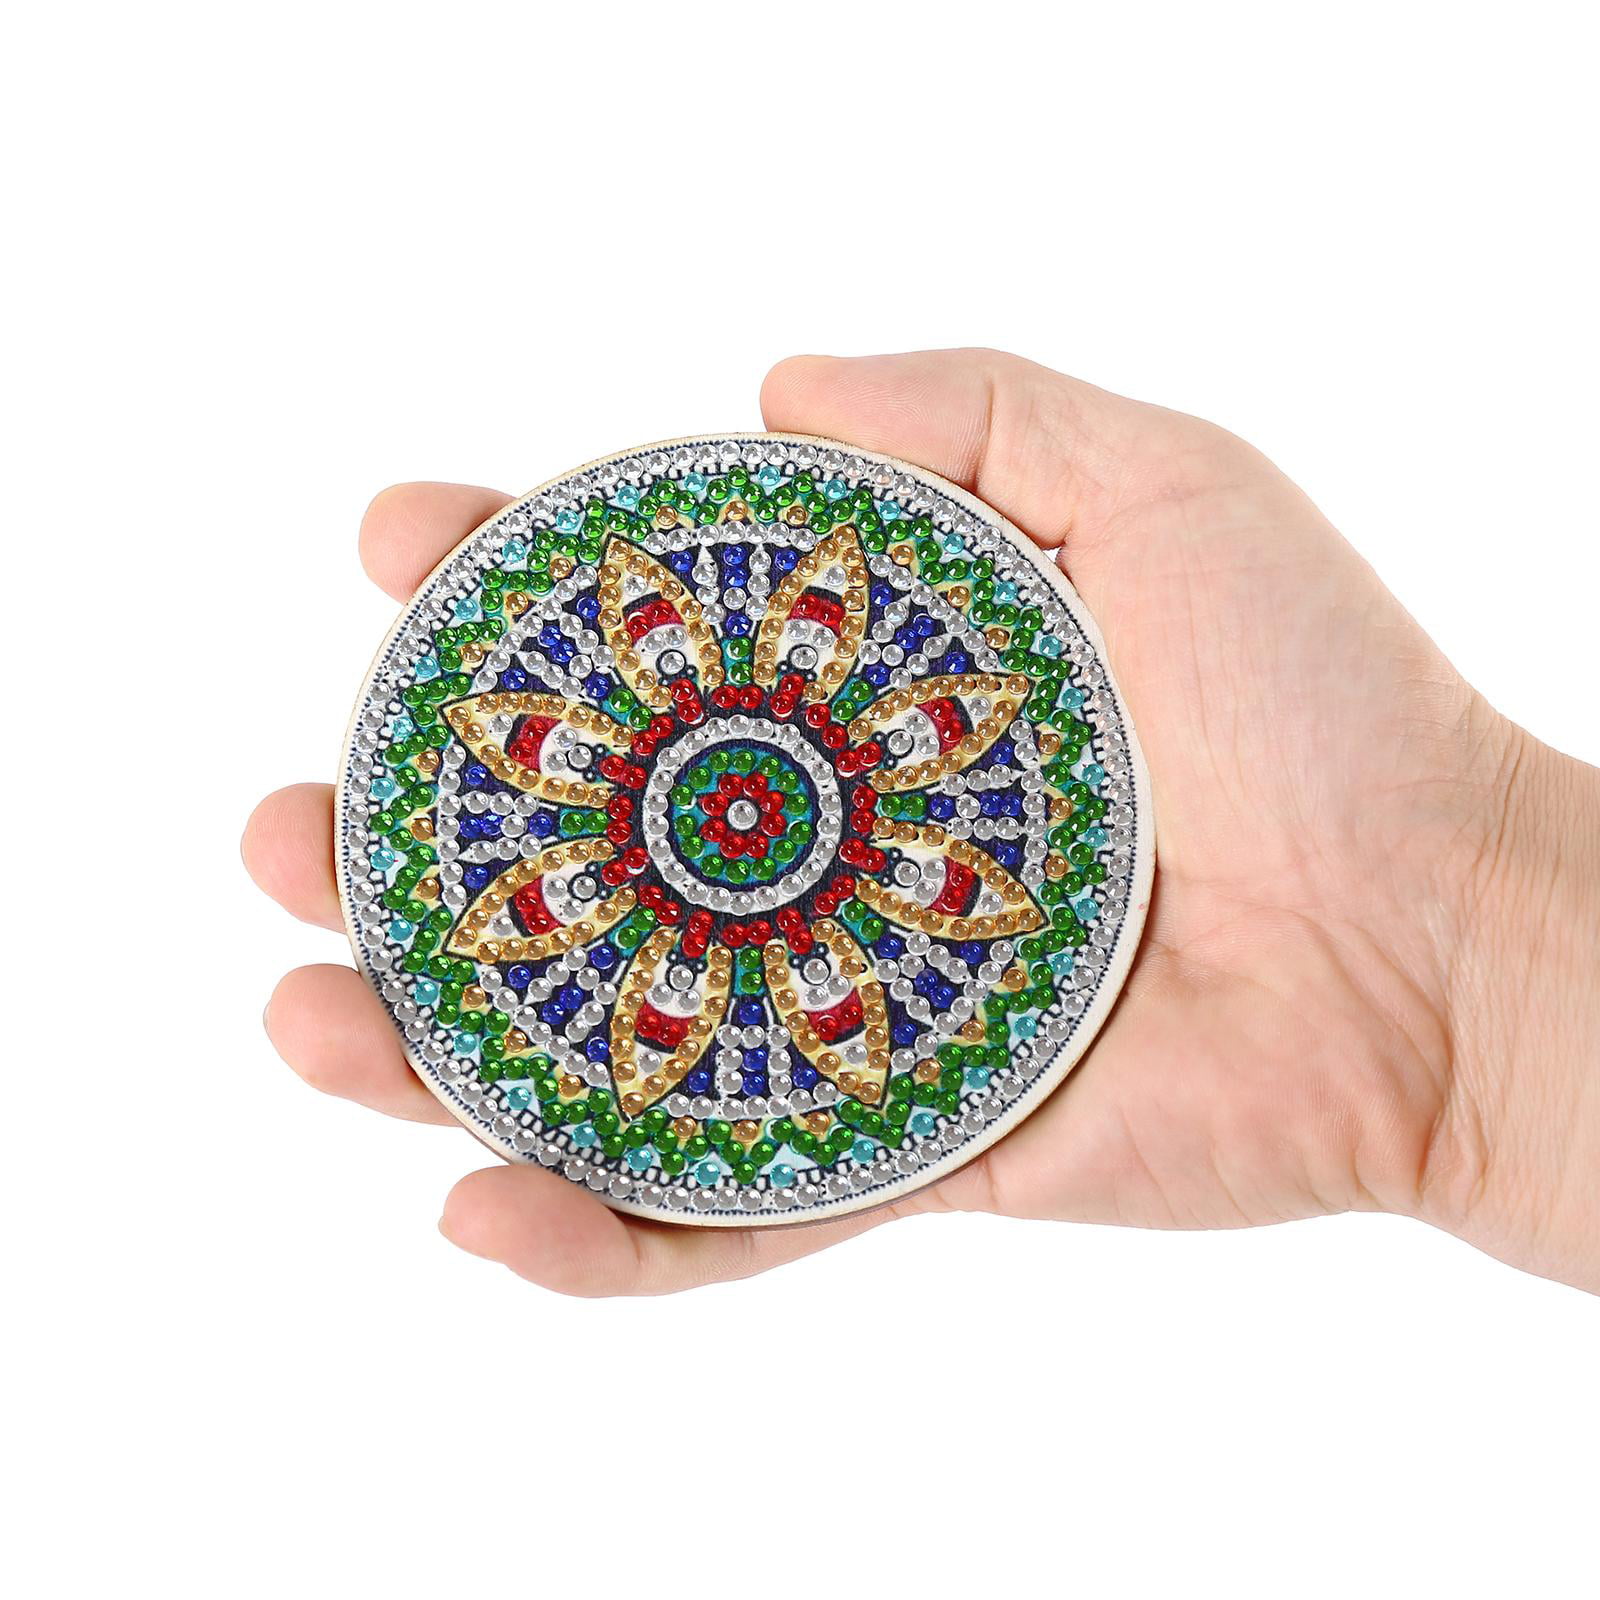 Billbotk Diamond Painting Coasters Kit 8 Pieces Mandala with